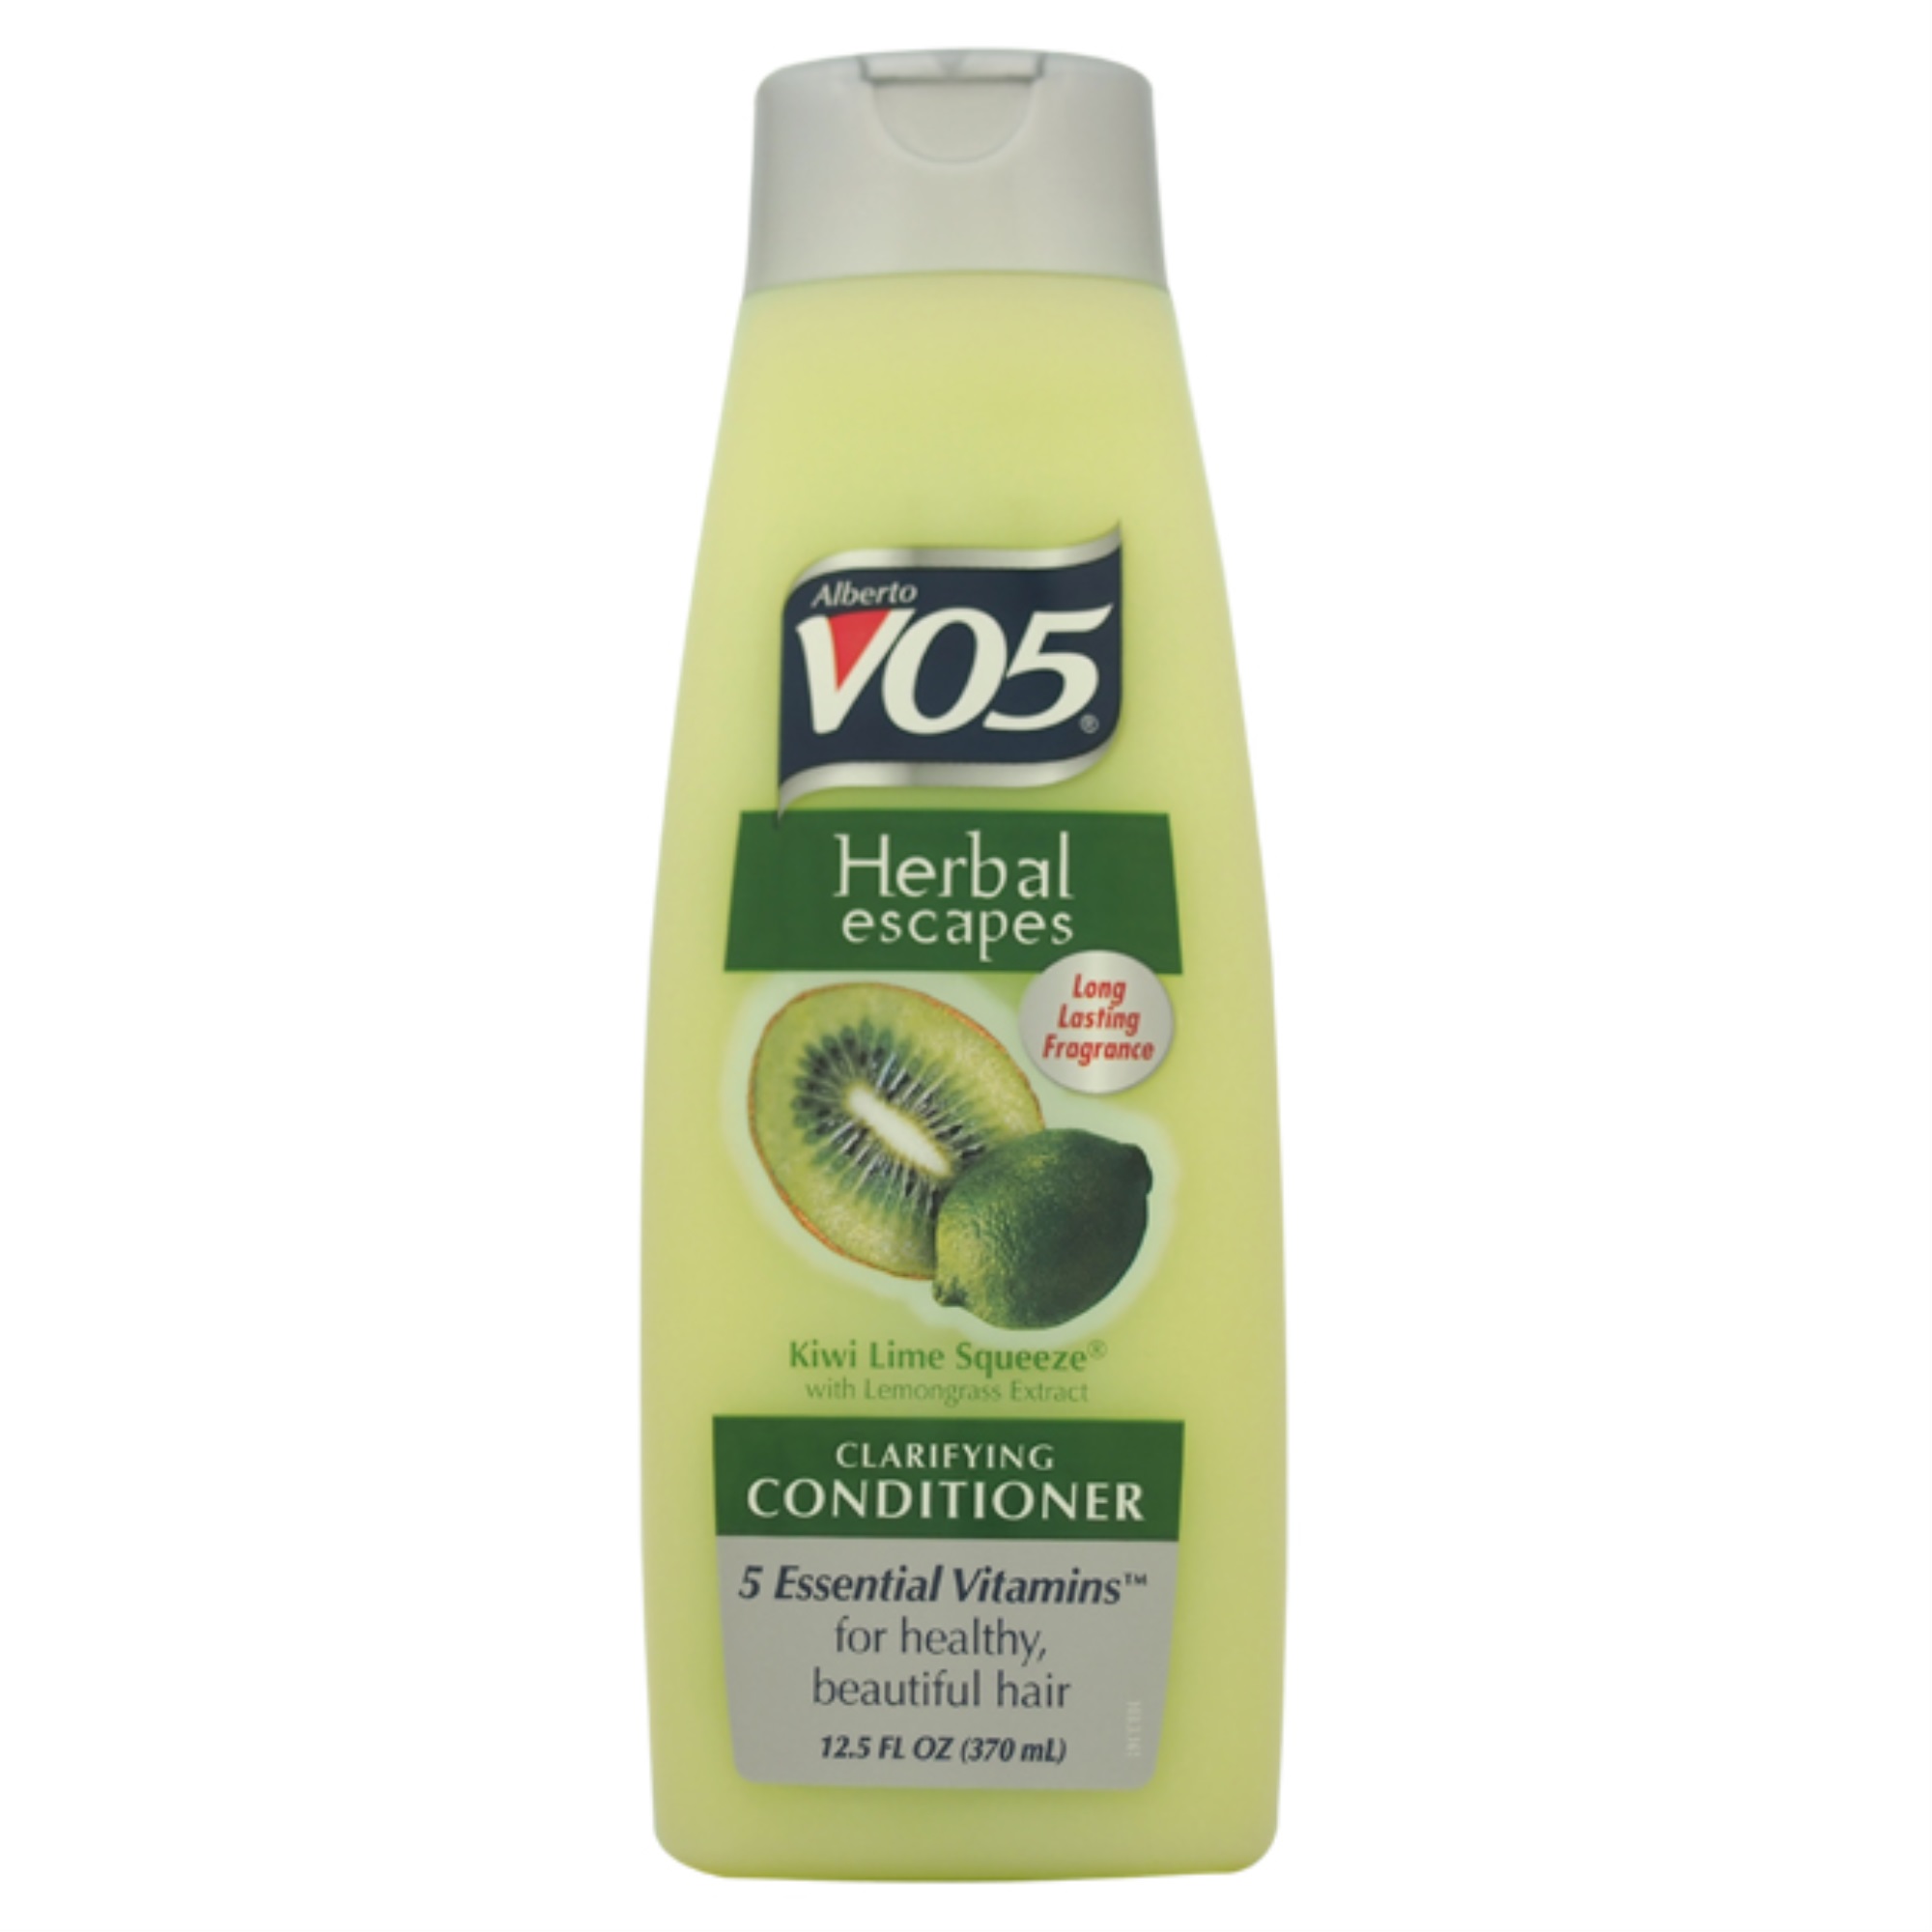 Alberto VO5 Herbal Escapes Clarifying Moisturizing nourishing Daily Conditioner, 12.5 fl oz - image 1 of 10